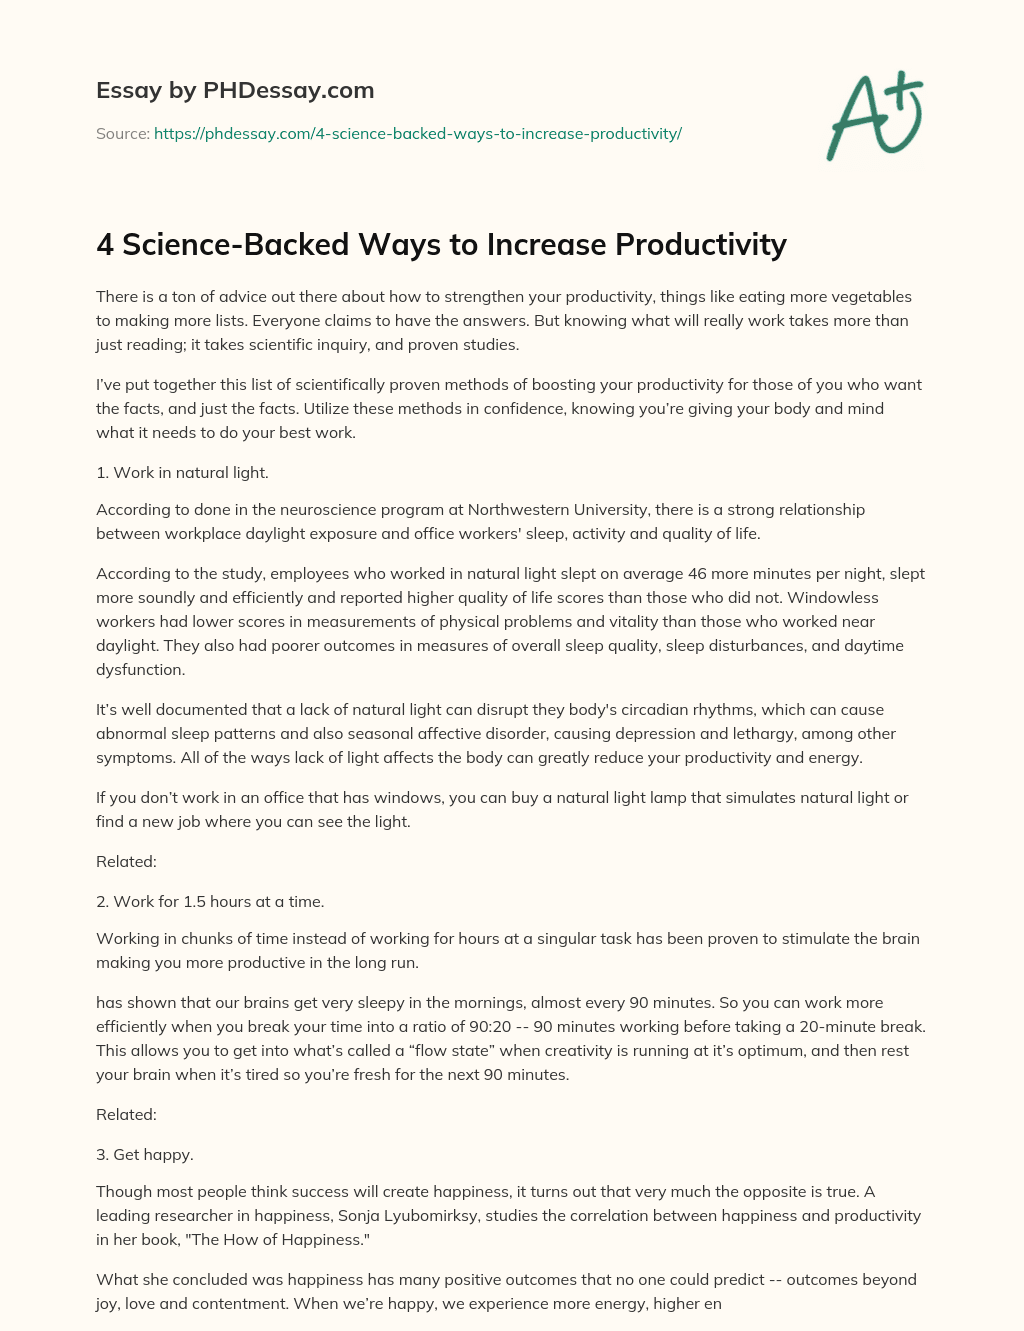 4 Science-Backed Ways to Increase Productivity essay